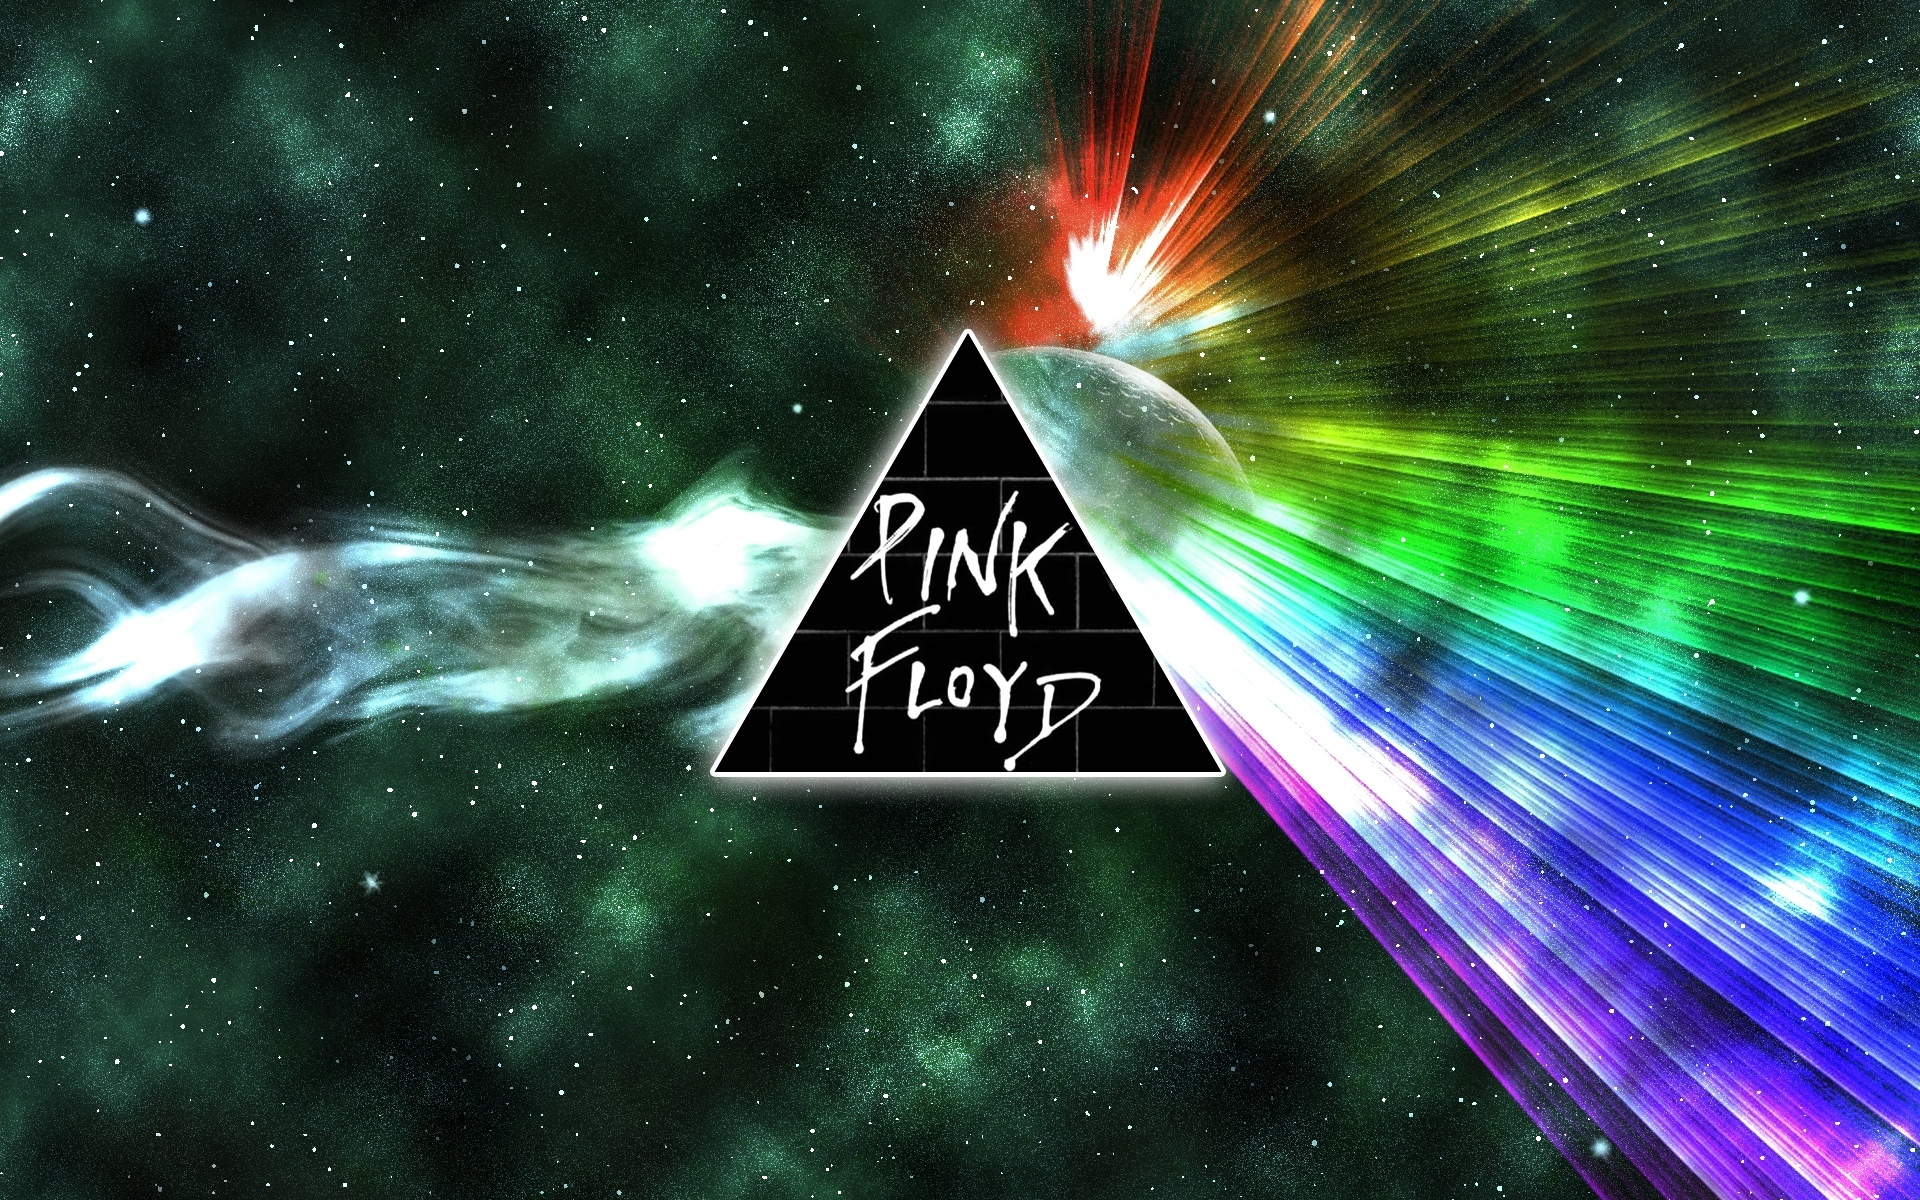 Pink Floyd pink floyd 10566727 1920 1200jpg 1920x1200